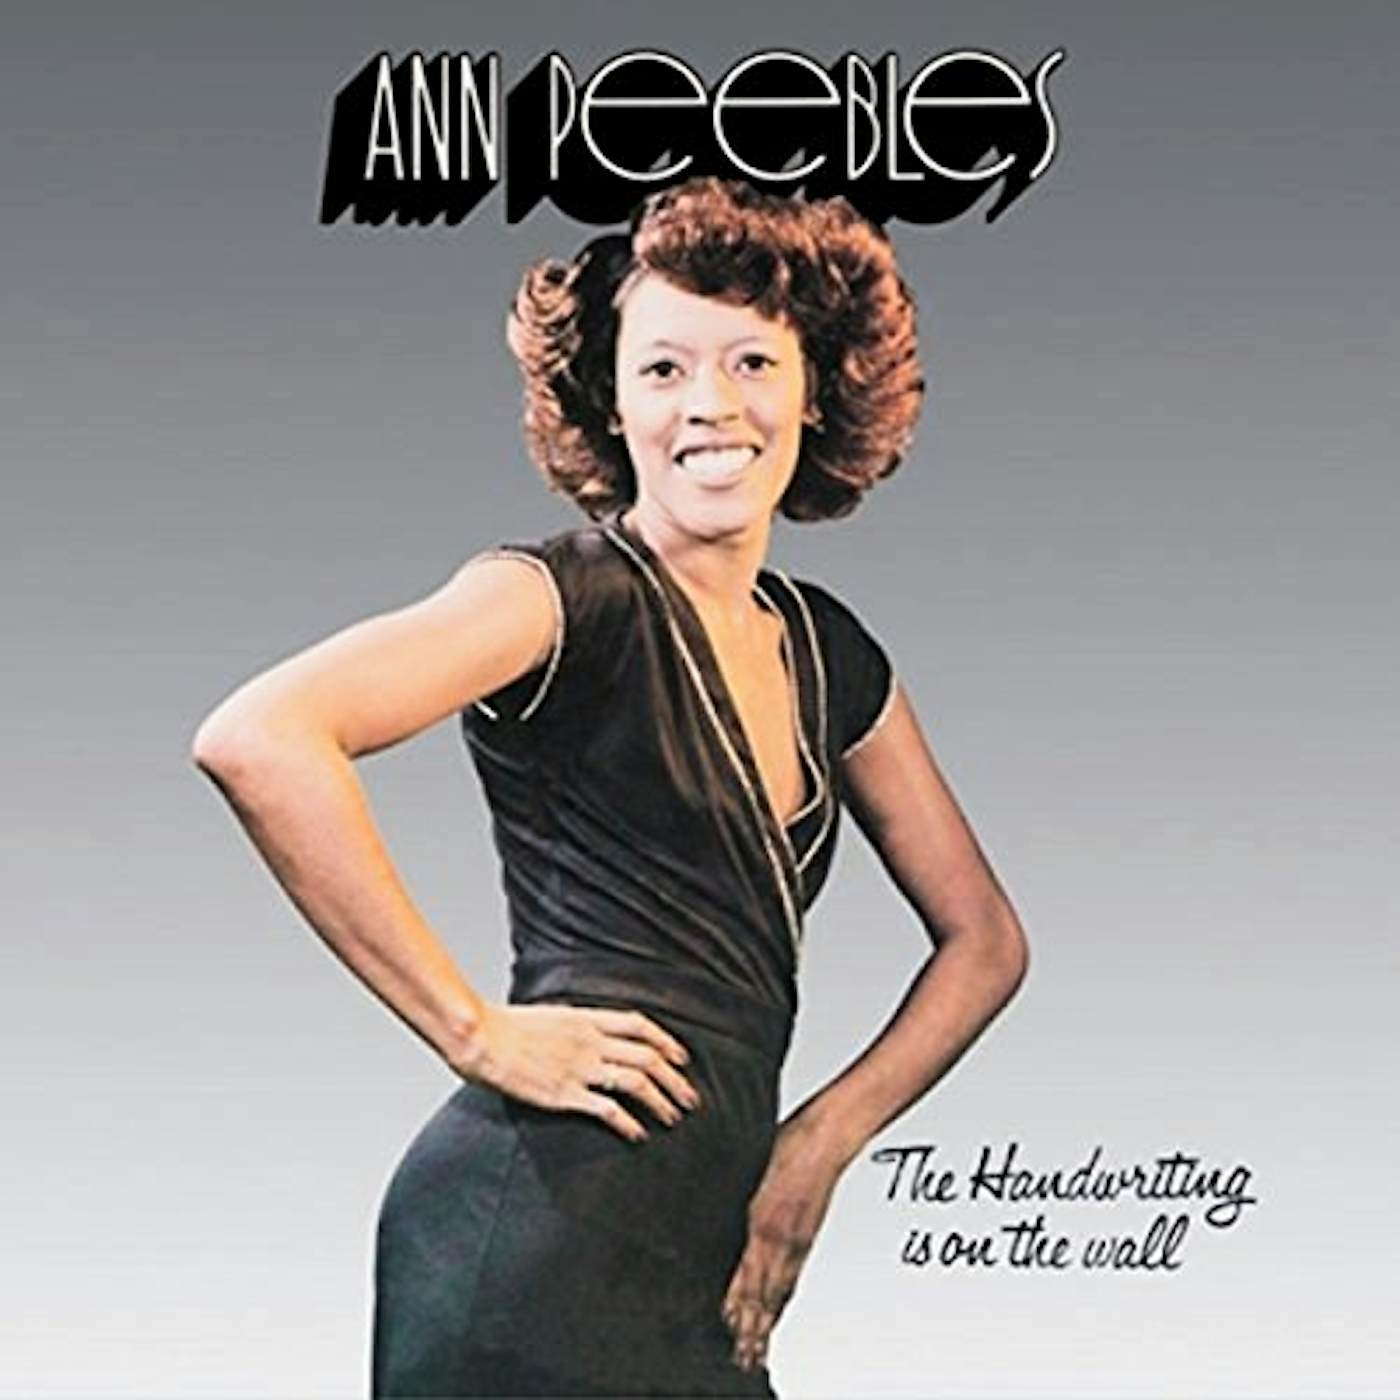 Ann Peebles HANDWRITING IS ON THE WALL Vinyl Record